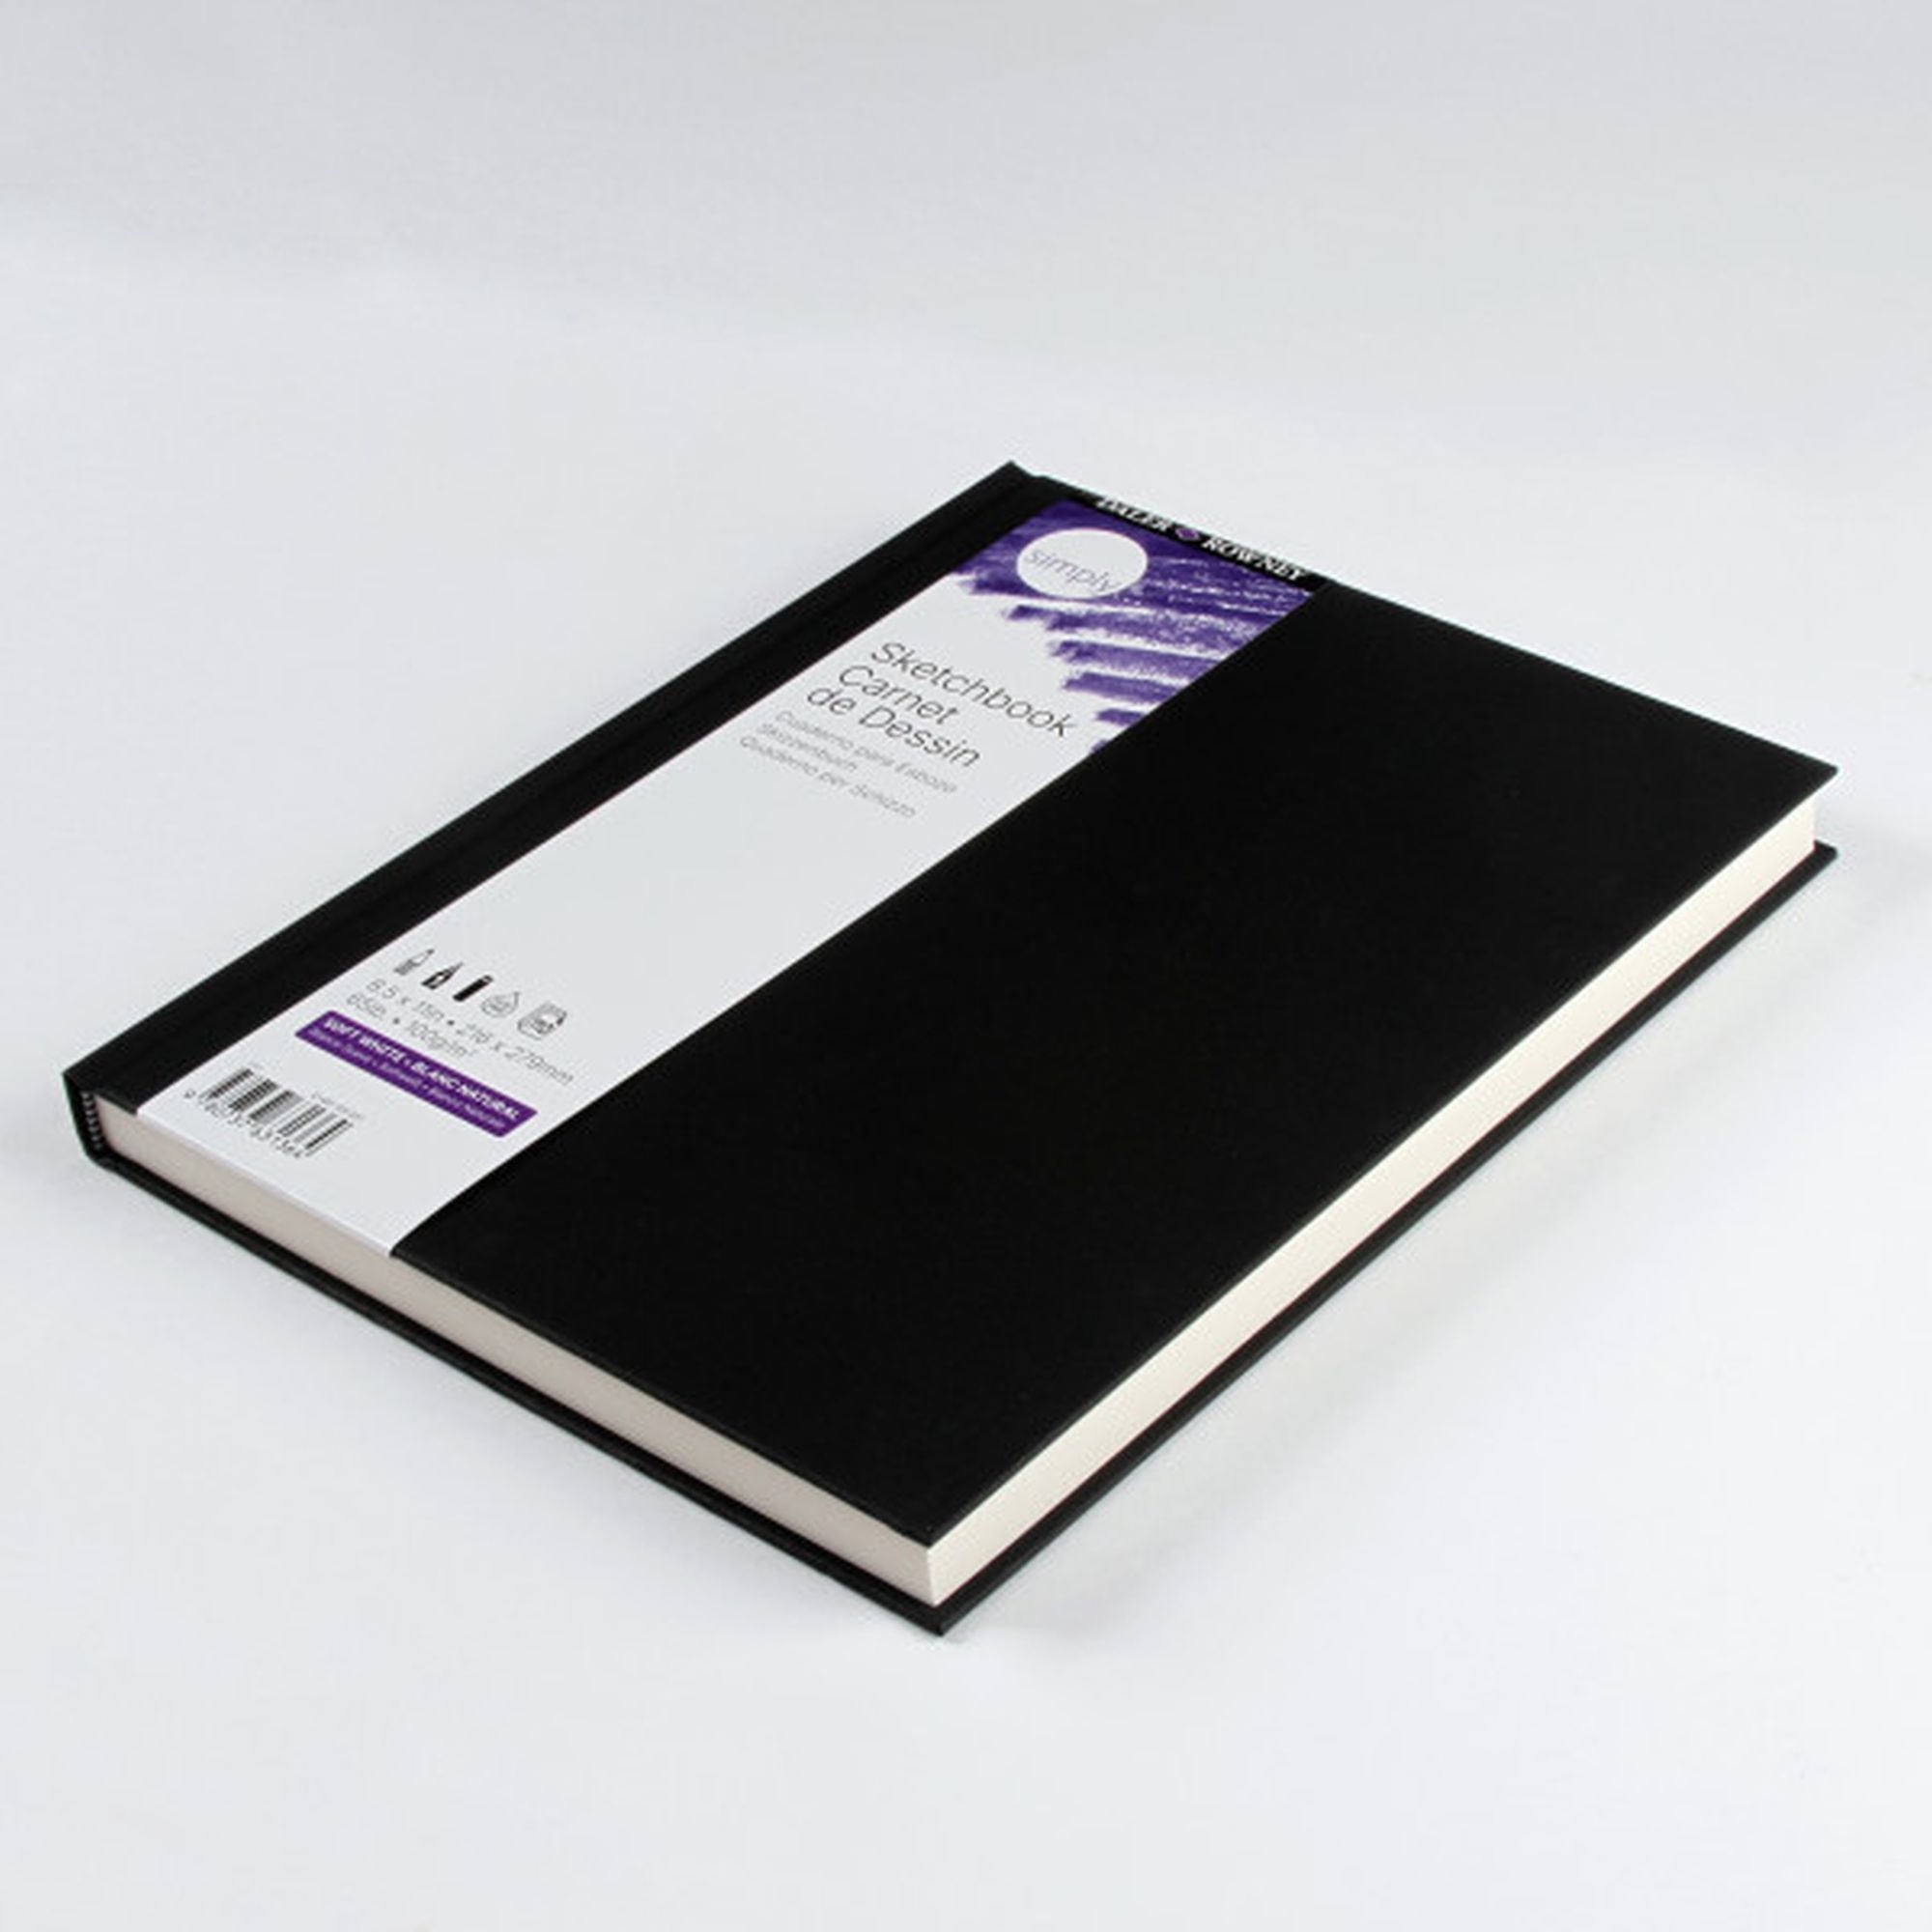 Daler-Rowney 5.5 x 11 Soft White Pages Simply Hardbound Sketchbook